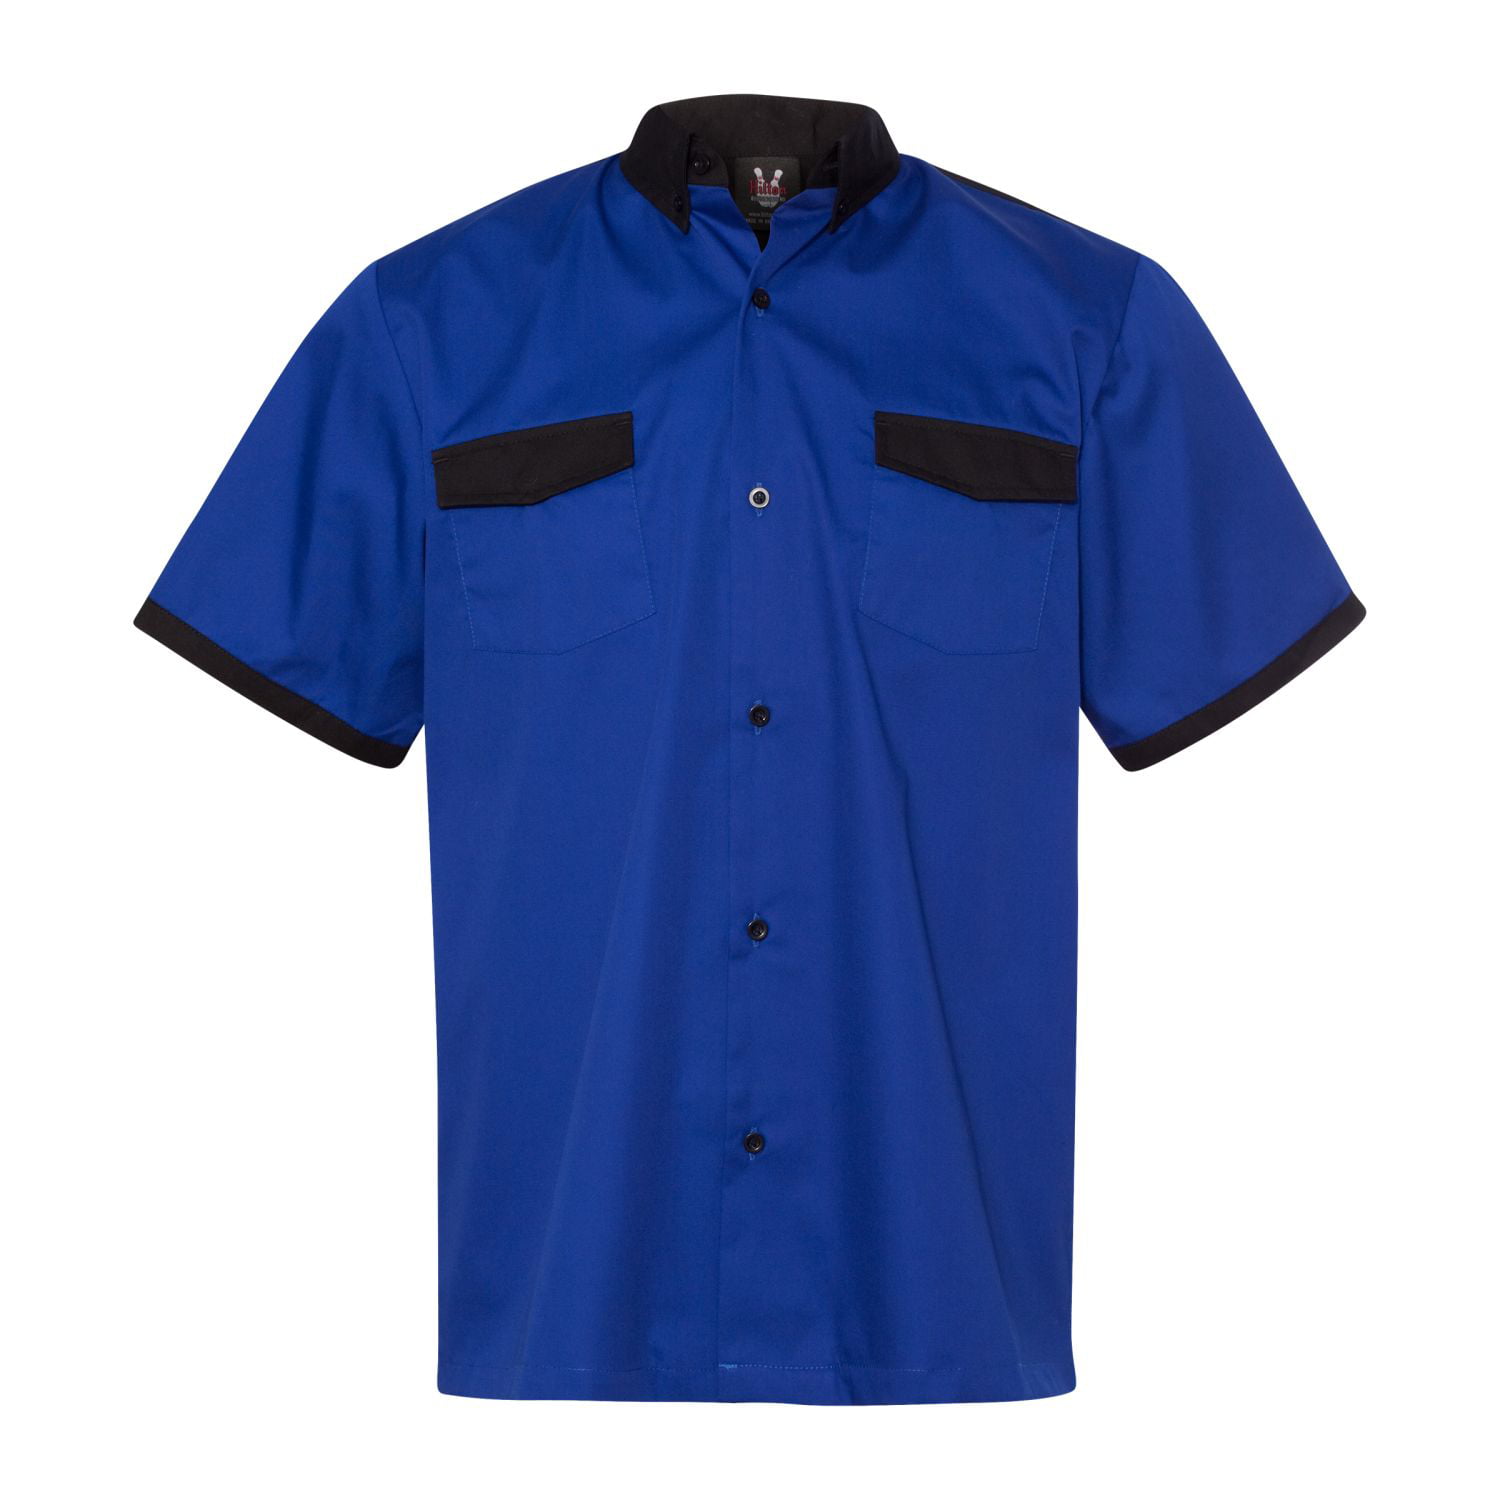 HP2260 Bristol Bowling Shirt - Walmart.com